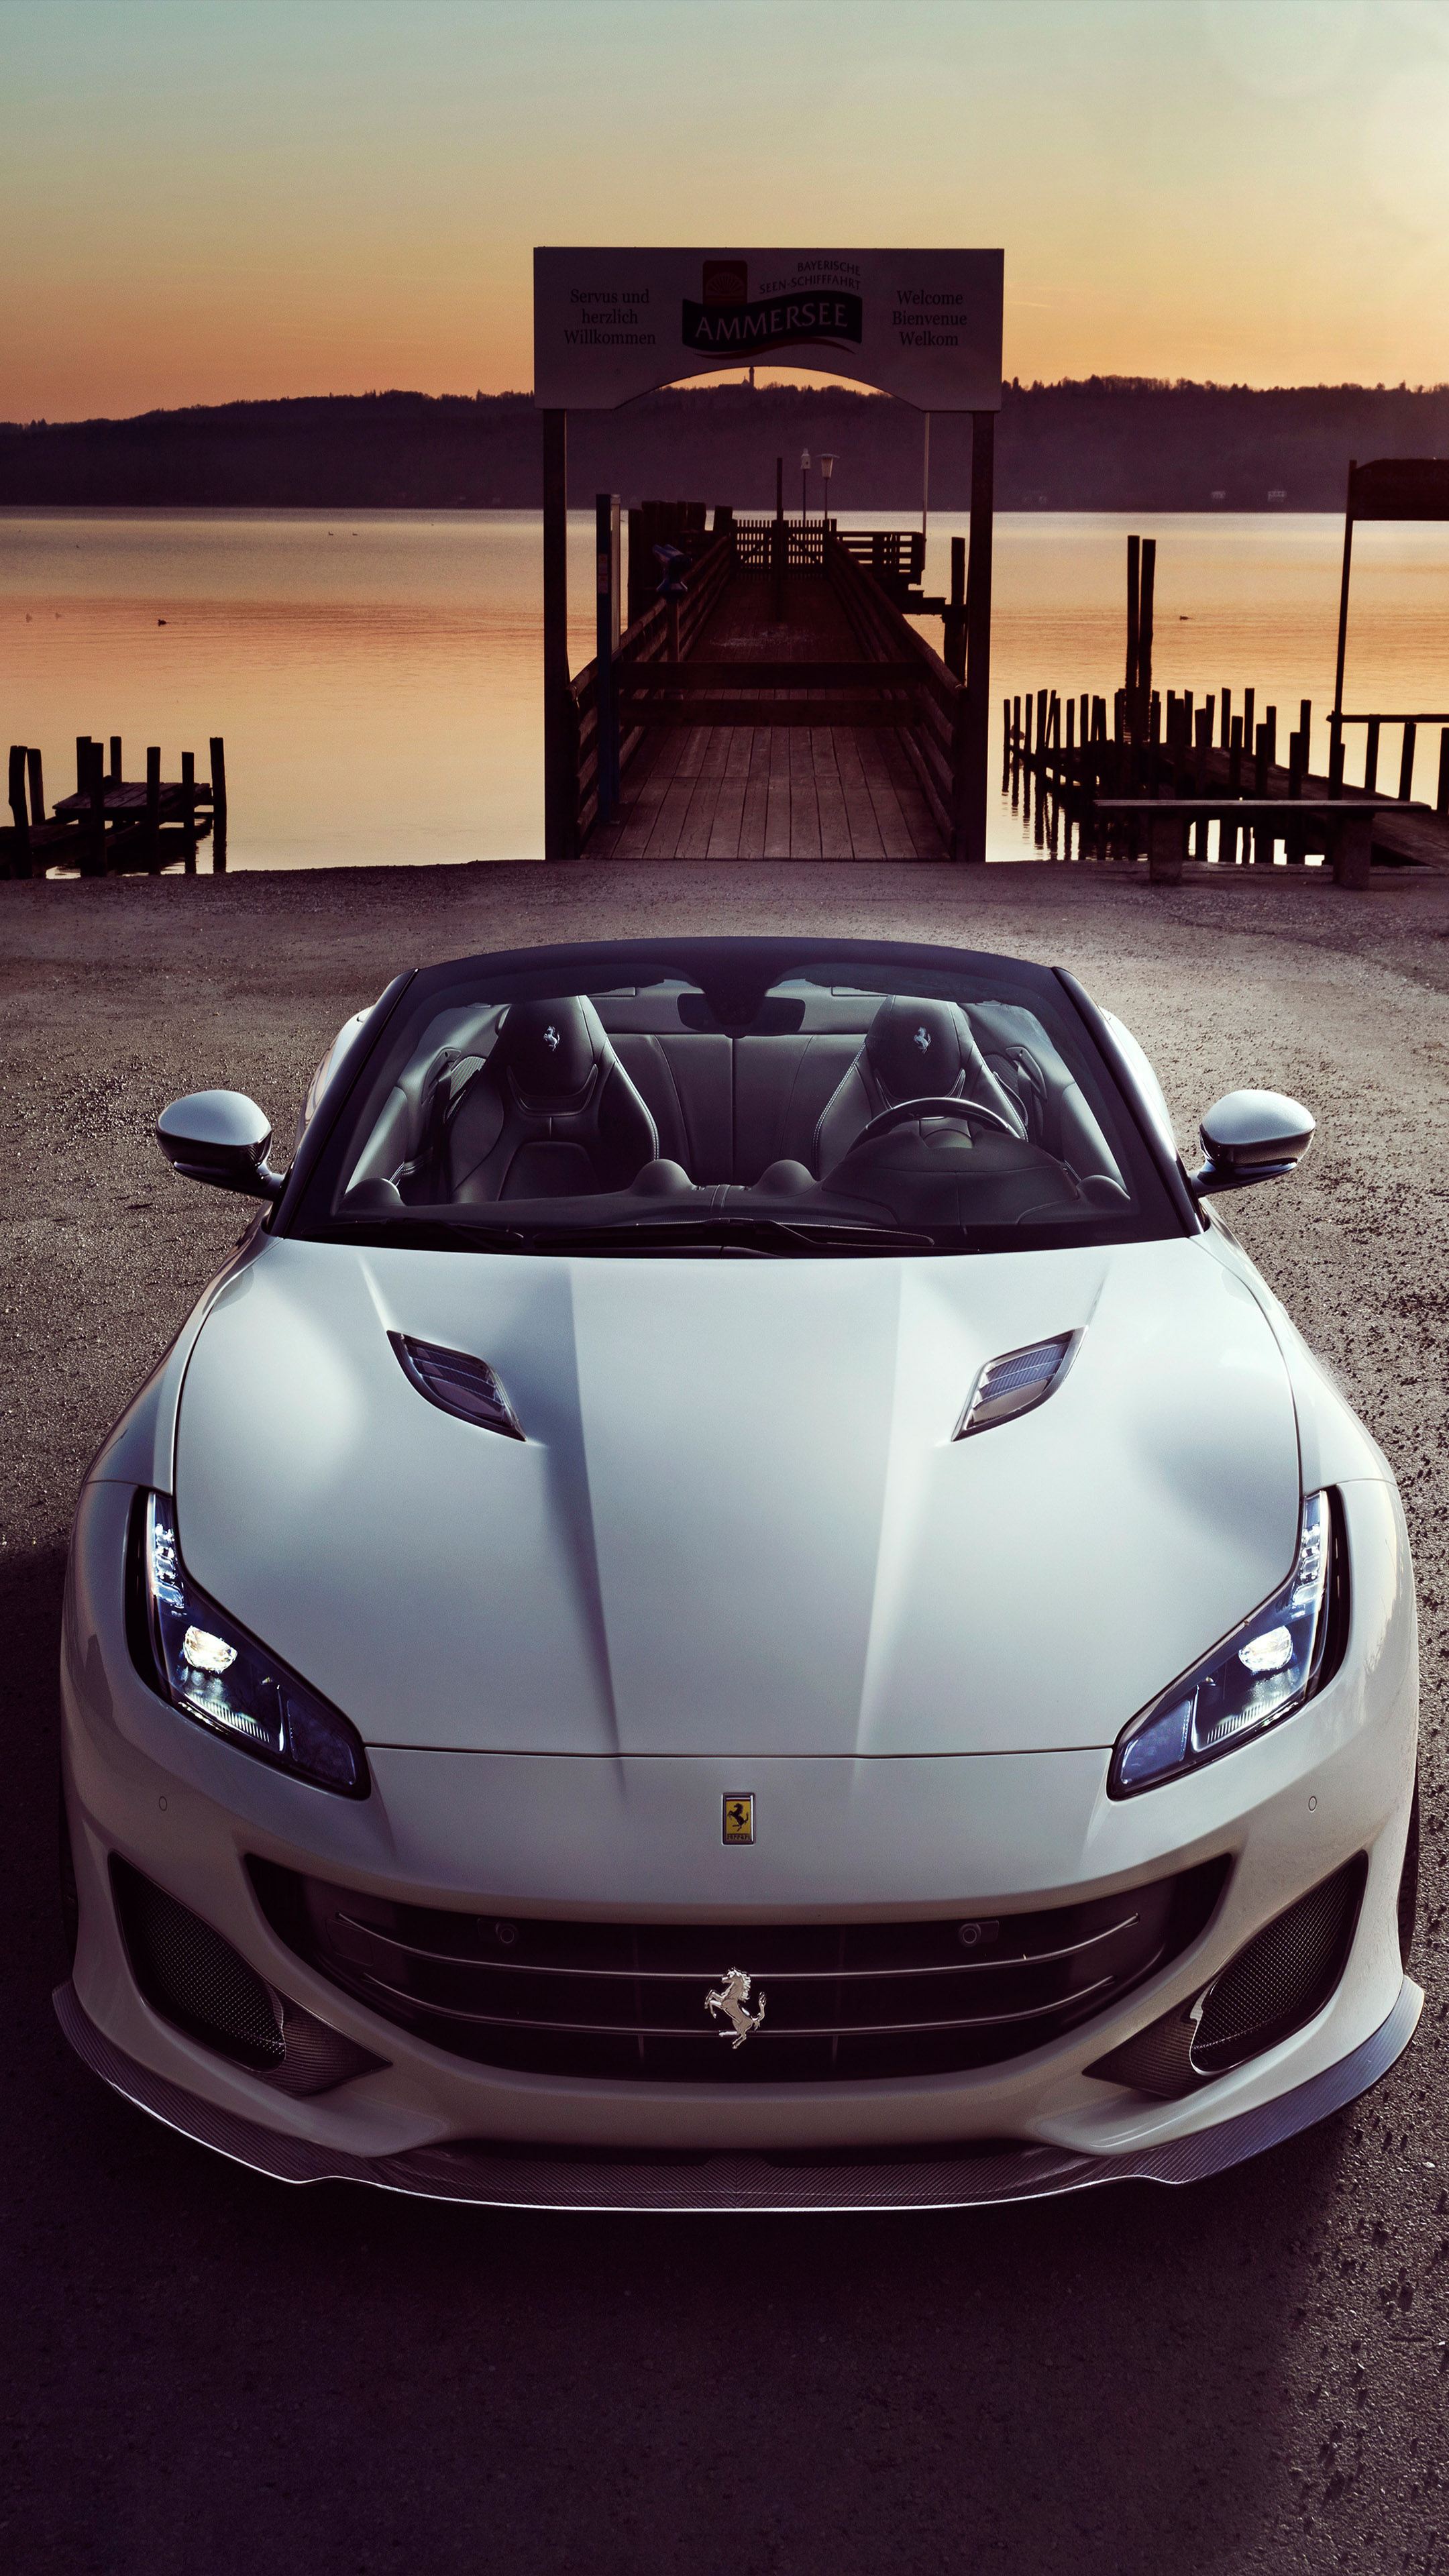 Ferrari Portofino M, 2021 magnificent beauty, Automotive artistry, Racing heritage, 2160x3840 4K Handy